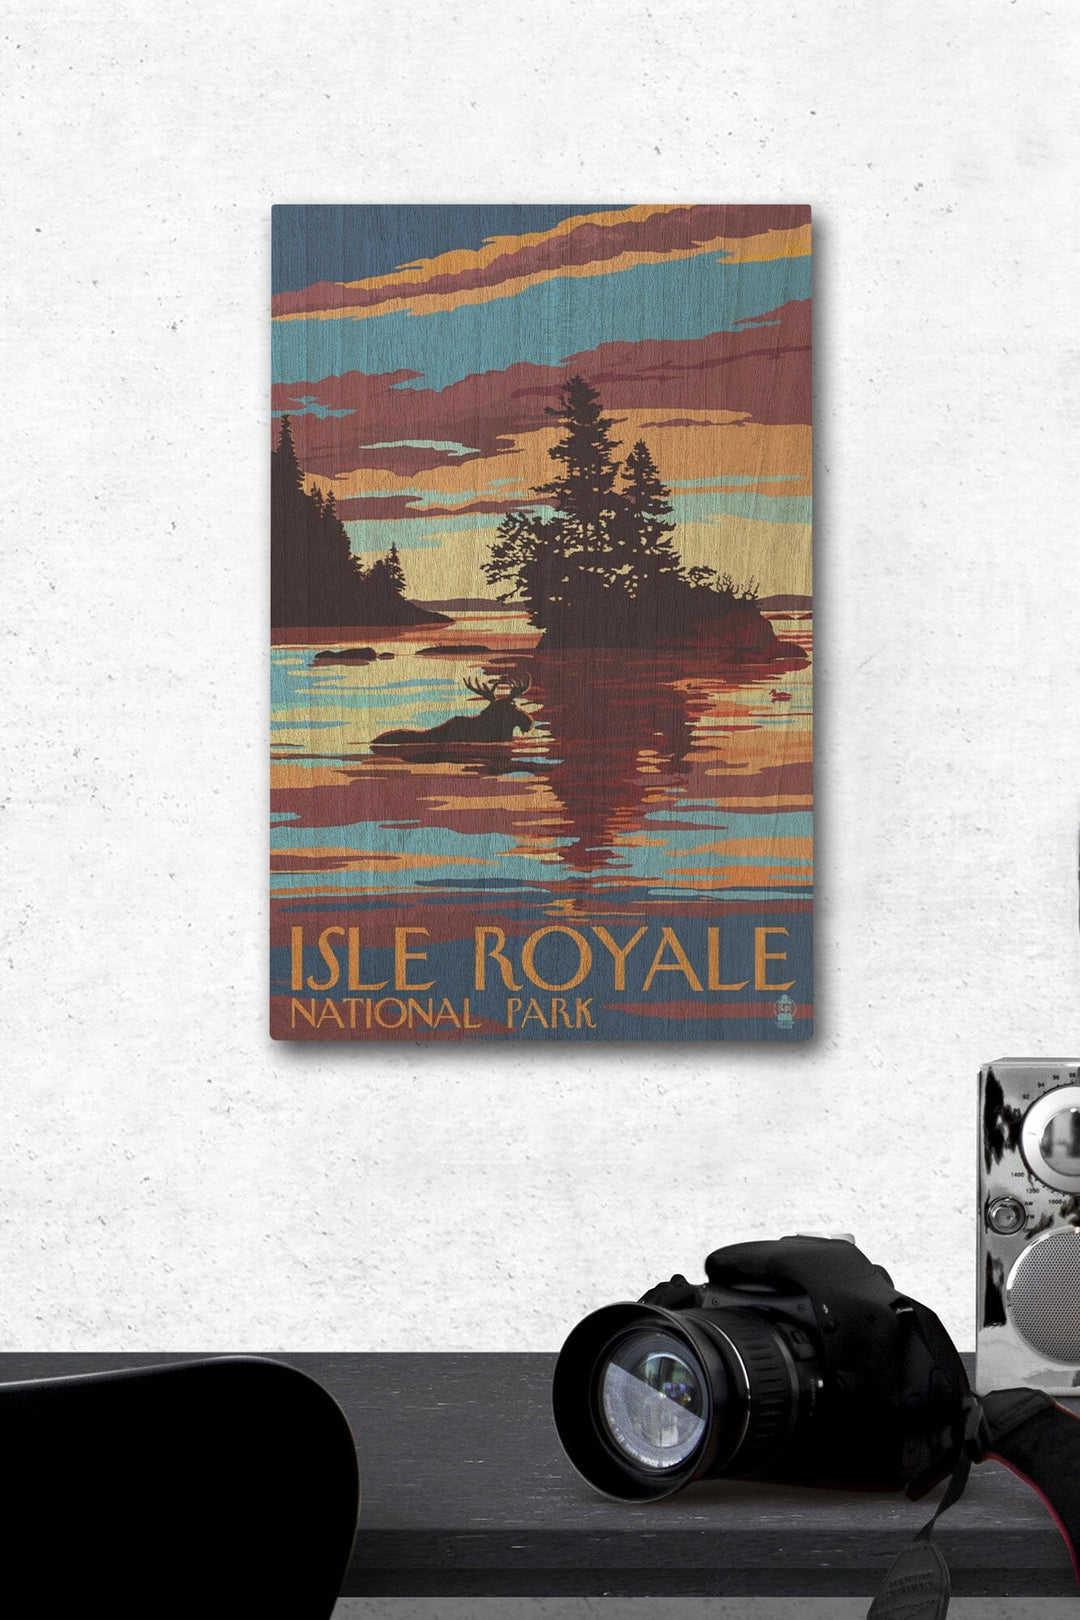 Isle Royale National Park, Michigan, Moose Swimming at Sunset, Lantern Press Artwork, Wood Signs and Postcards Wood Lantern Press 12 x 18 Wood Gallery Print 